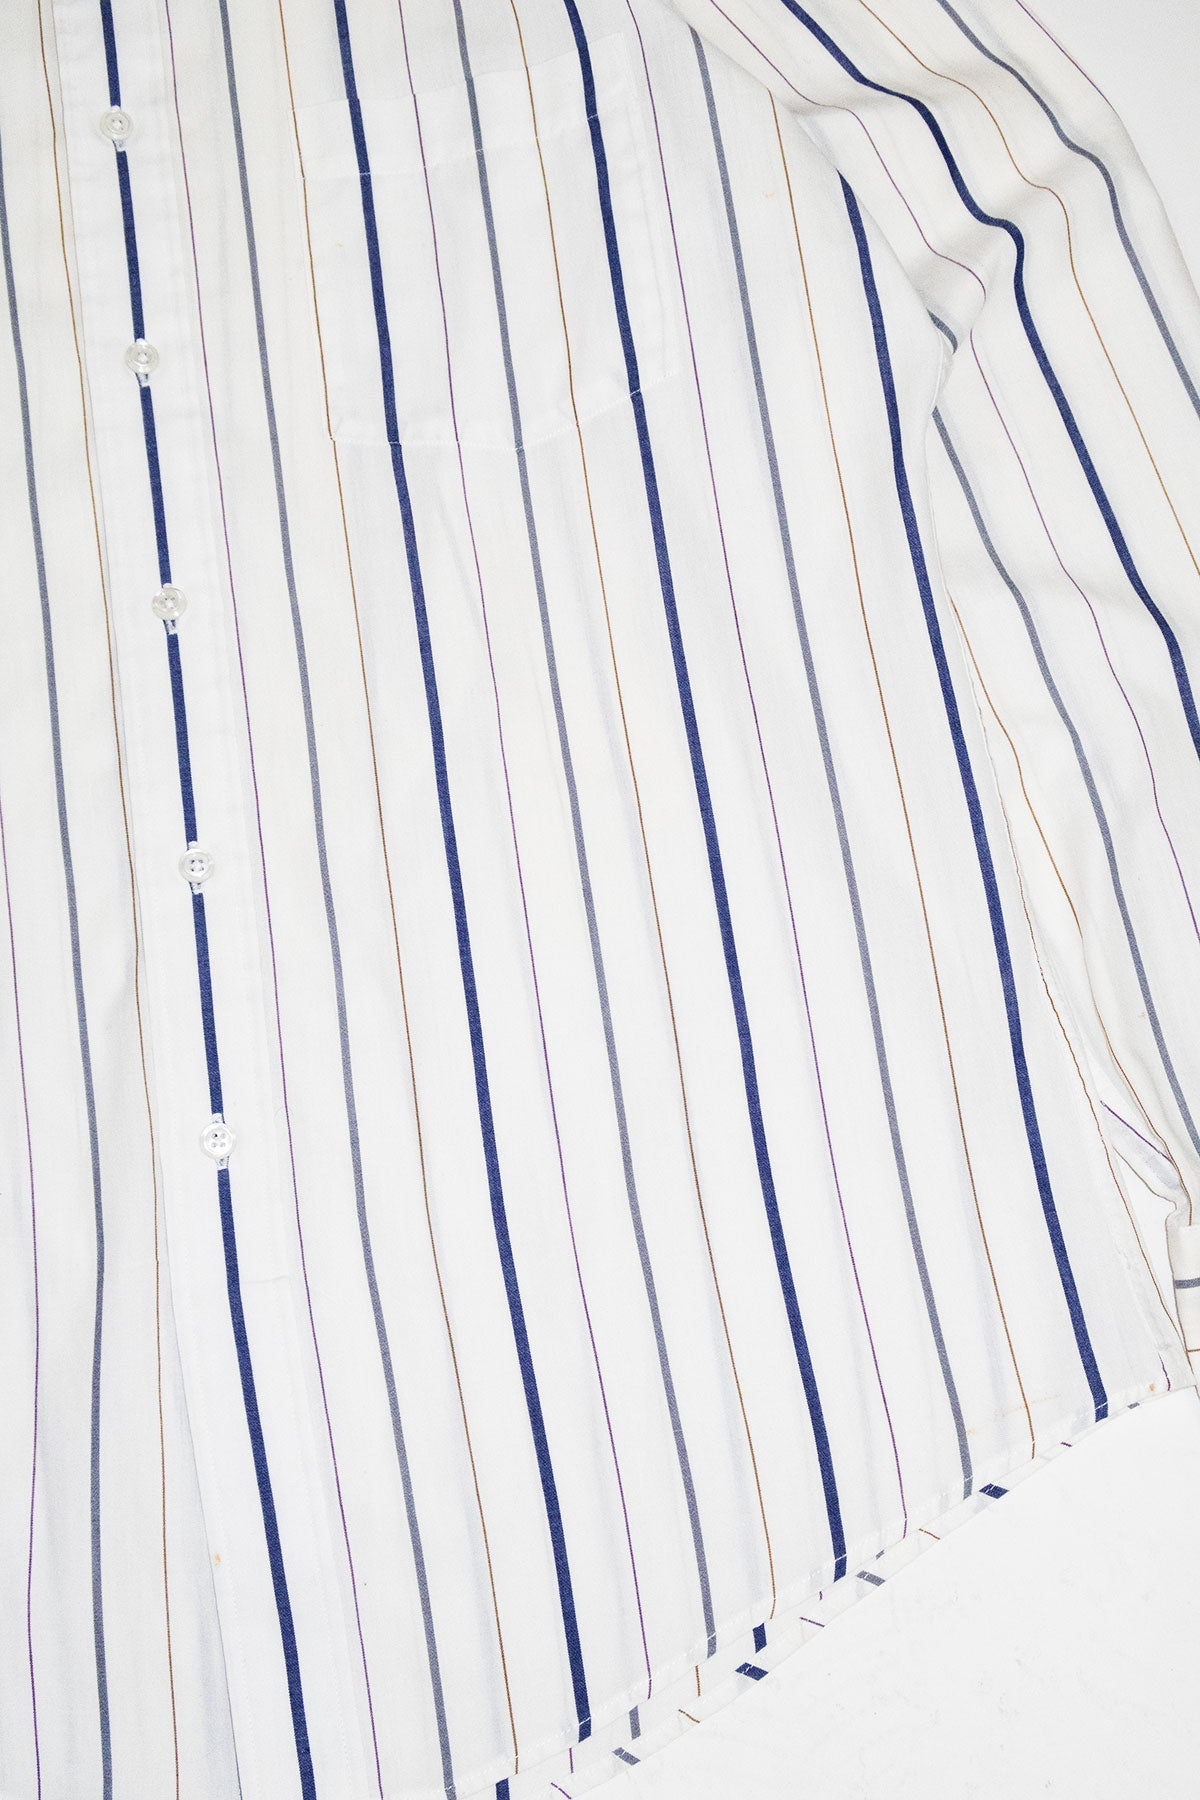 Christian Dior White Striped Dress Shirt / Medium Mens - Jade Vintage